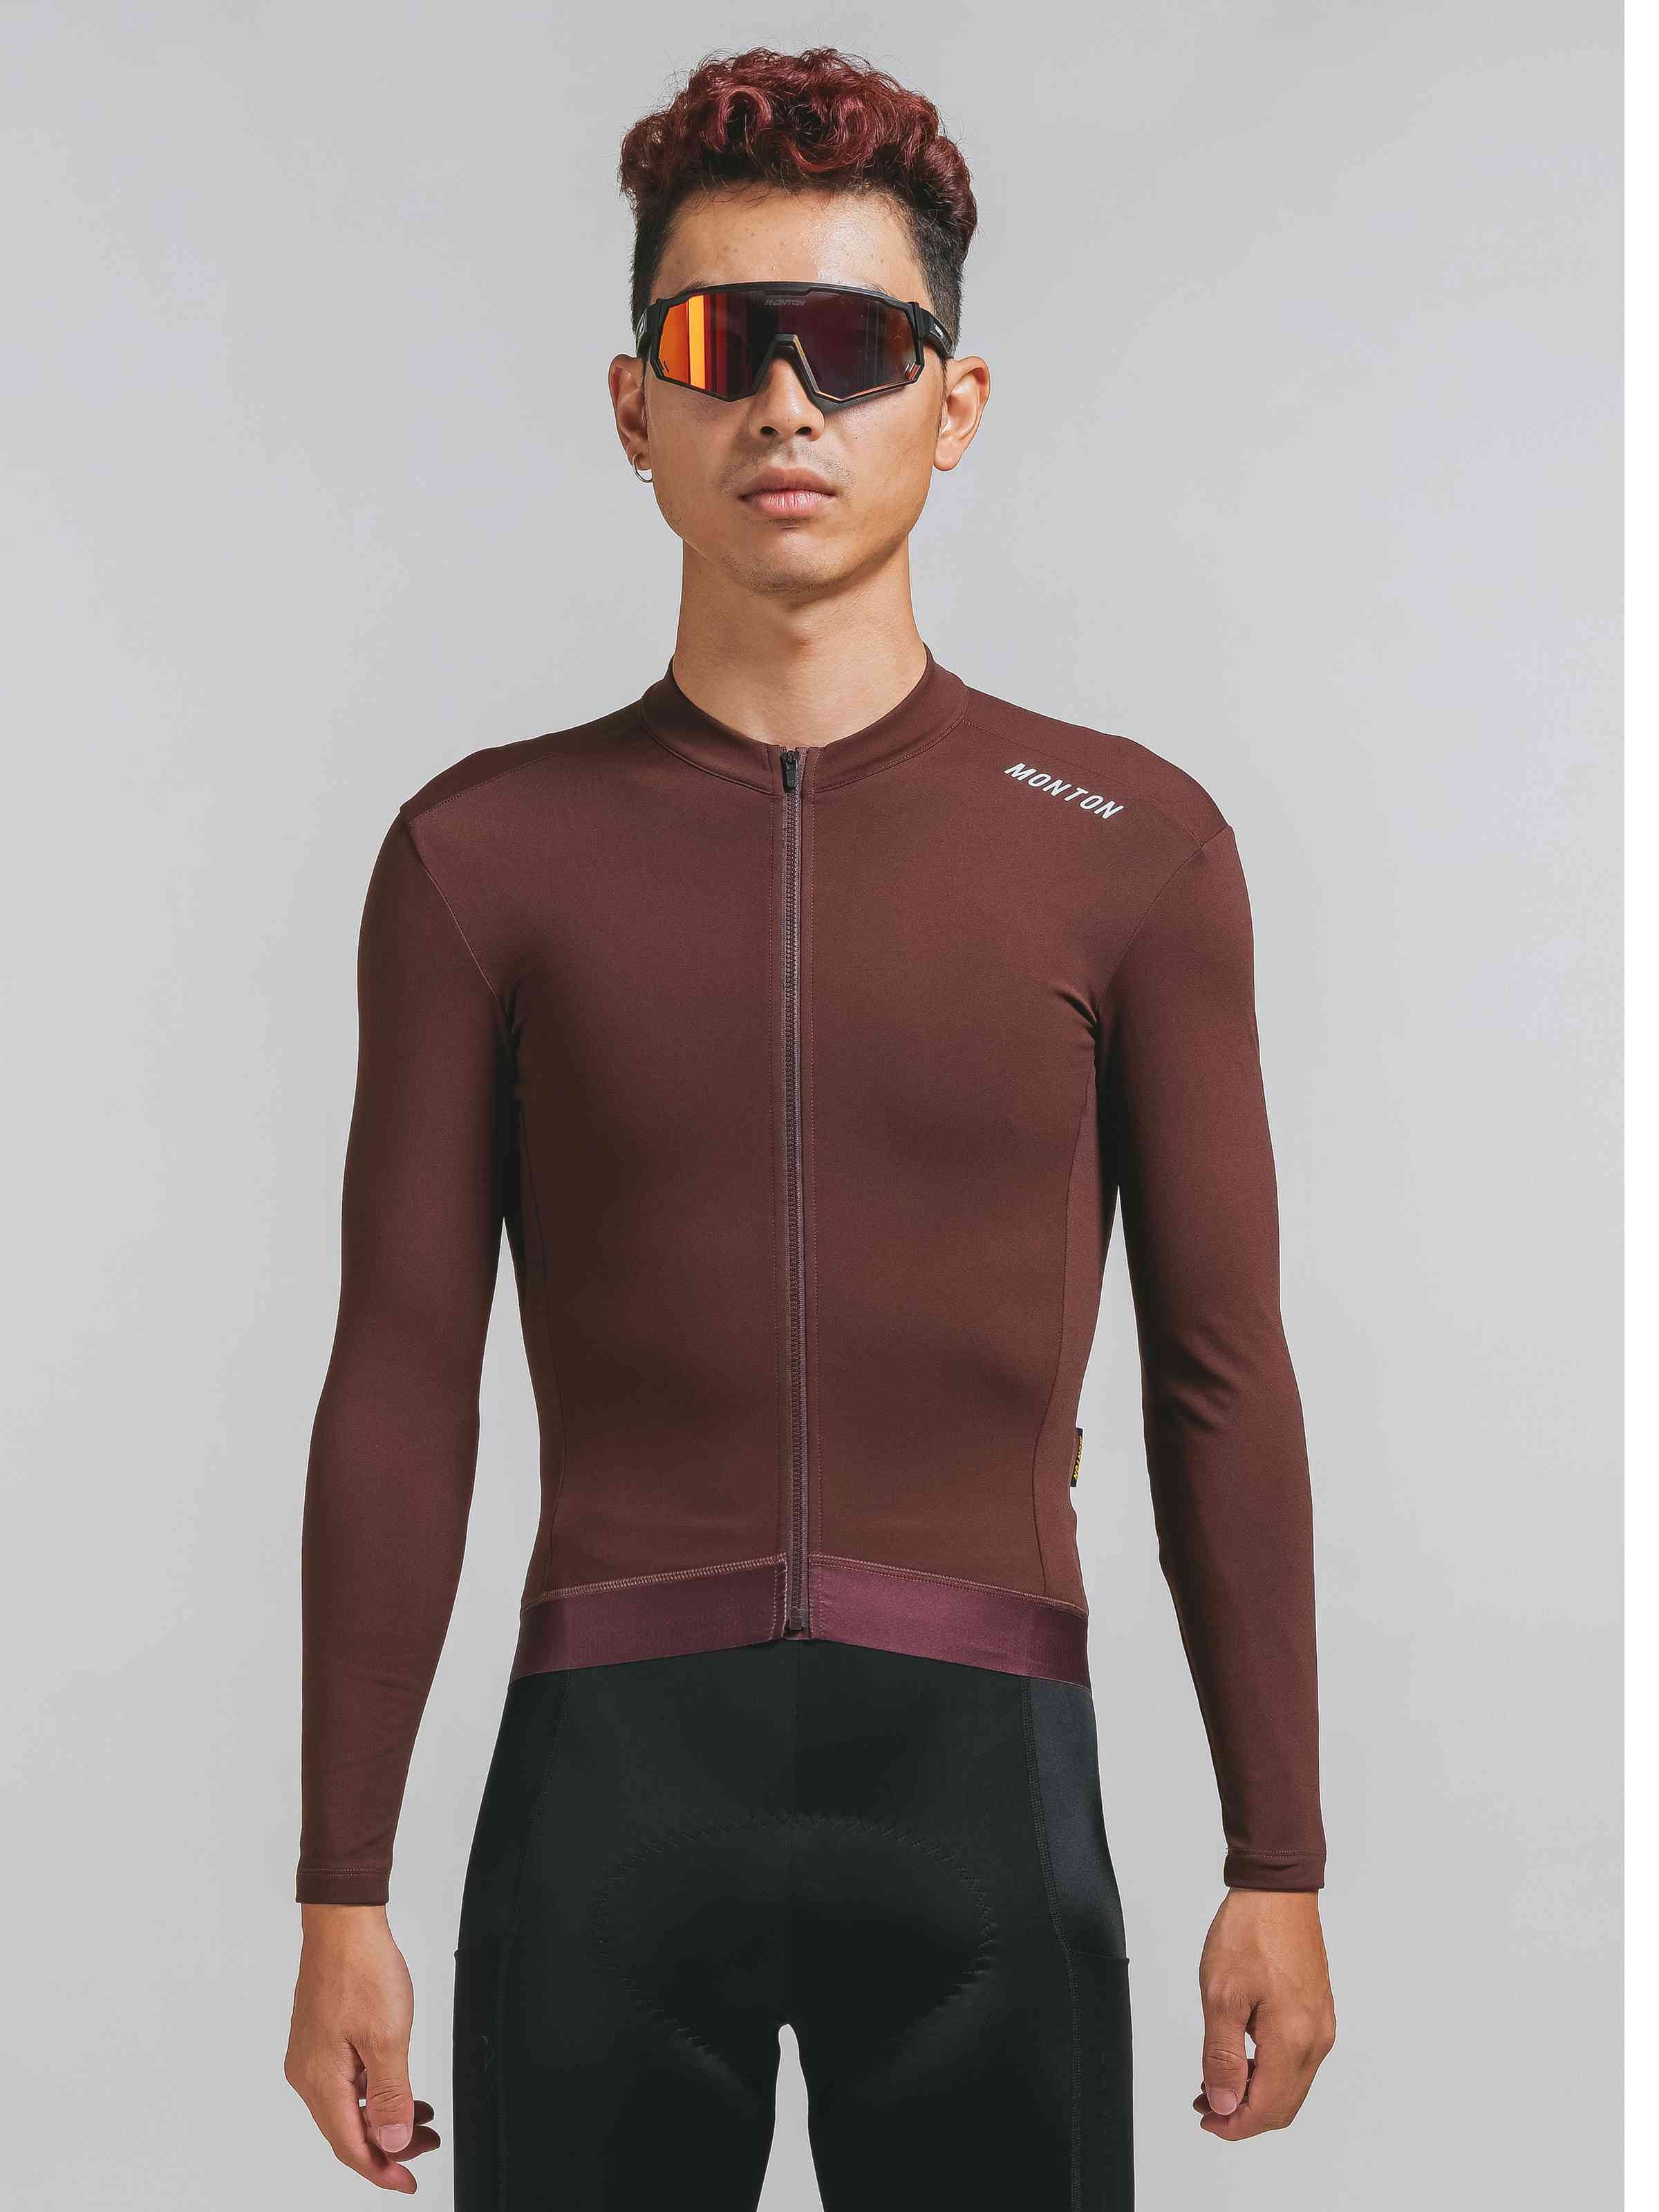 mens thermal cycling jersey